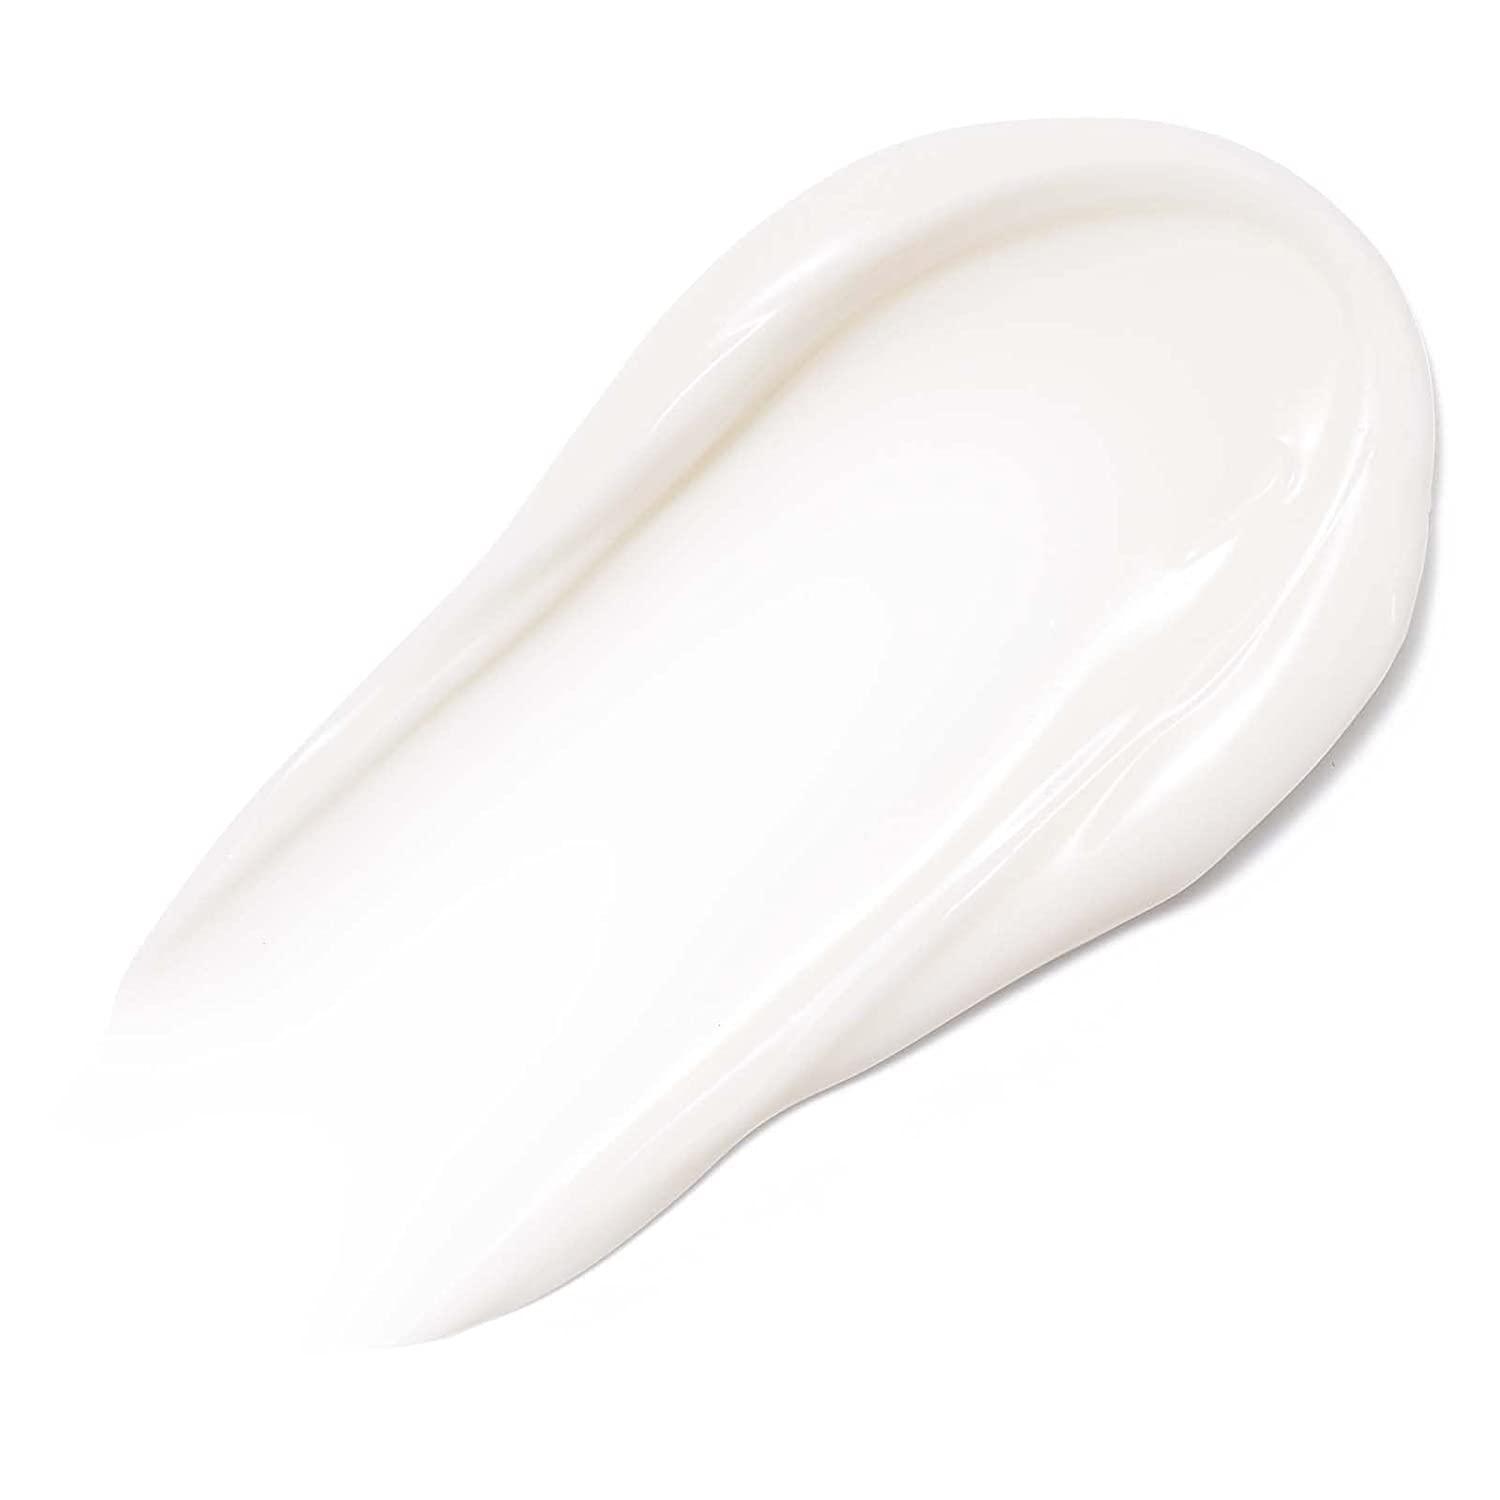 Review: Tula's Beauty Sleep Overnight Repair Cream